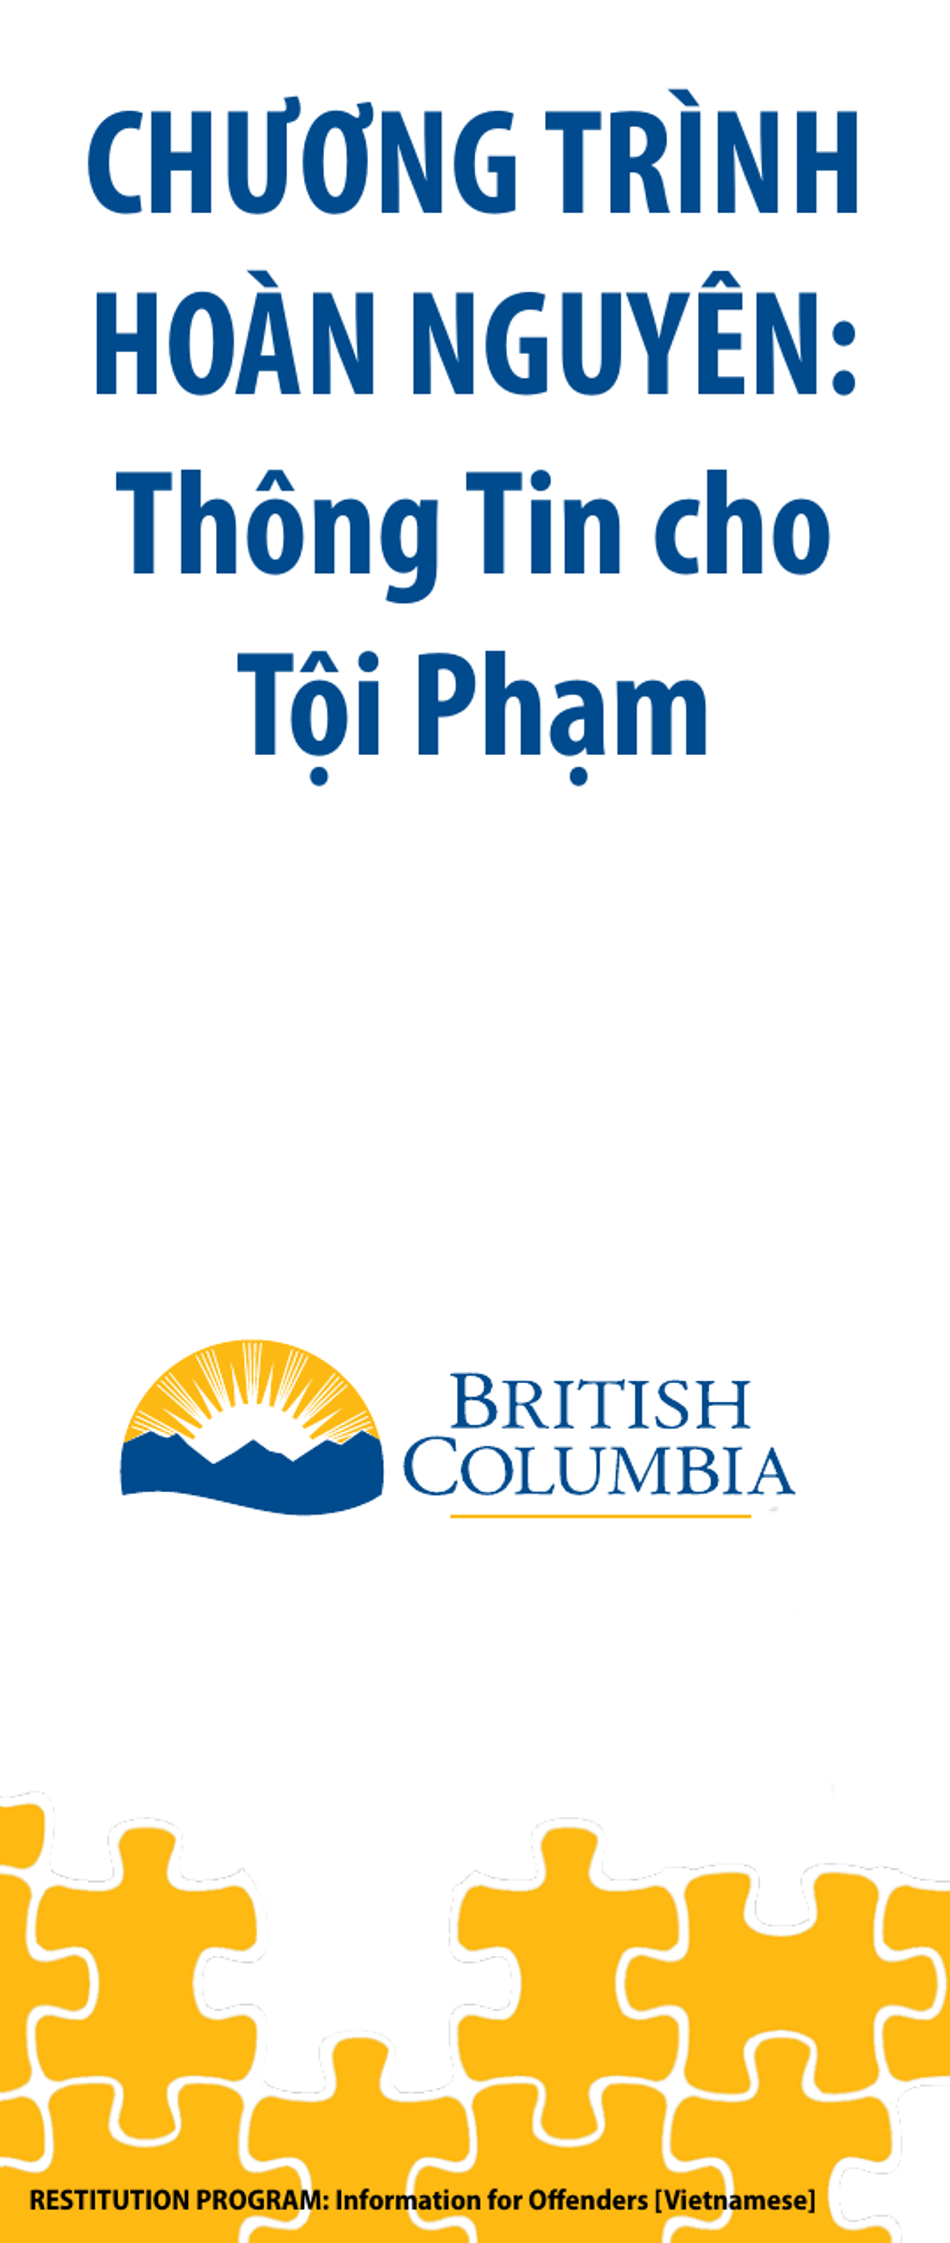 Restitution Program Application Form - British Columbia, Canada (English / Vietnamese), Page 1